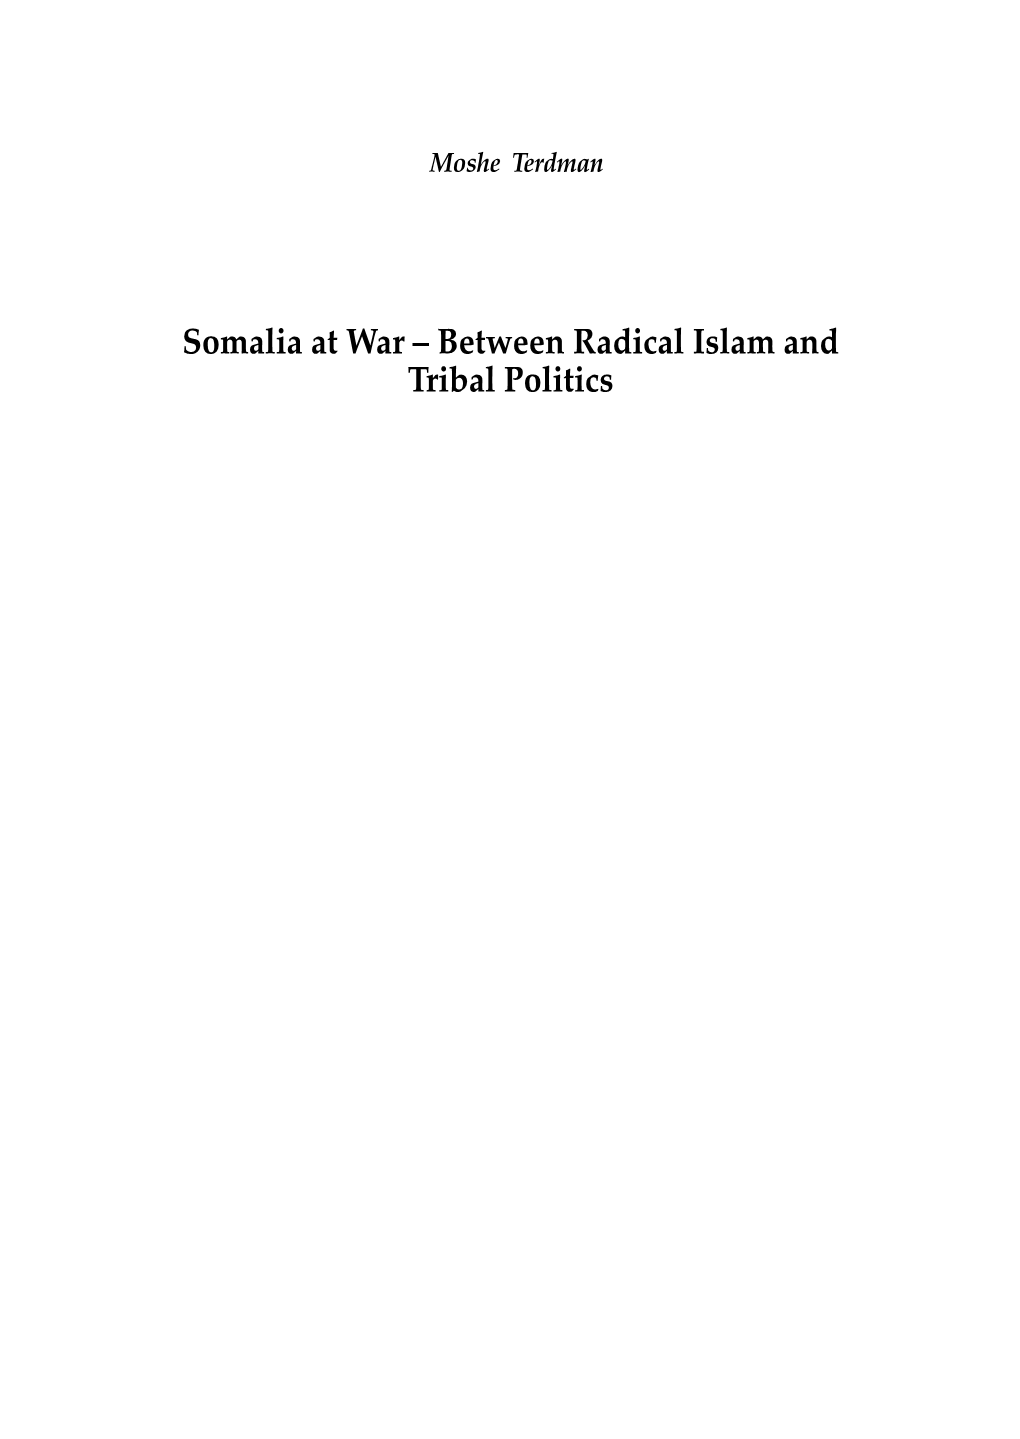 Somalia at War – Between Radical Islam and Tribal Politics Established in 2004 by Tel Aviv University, the S